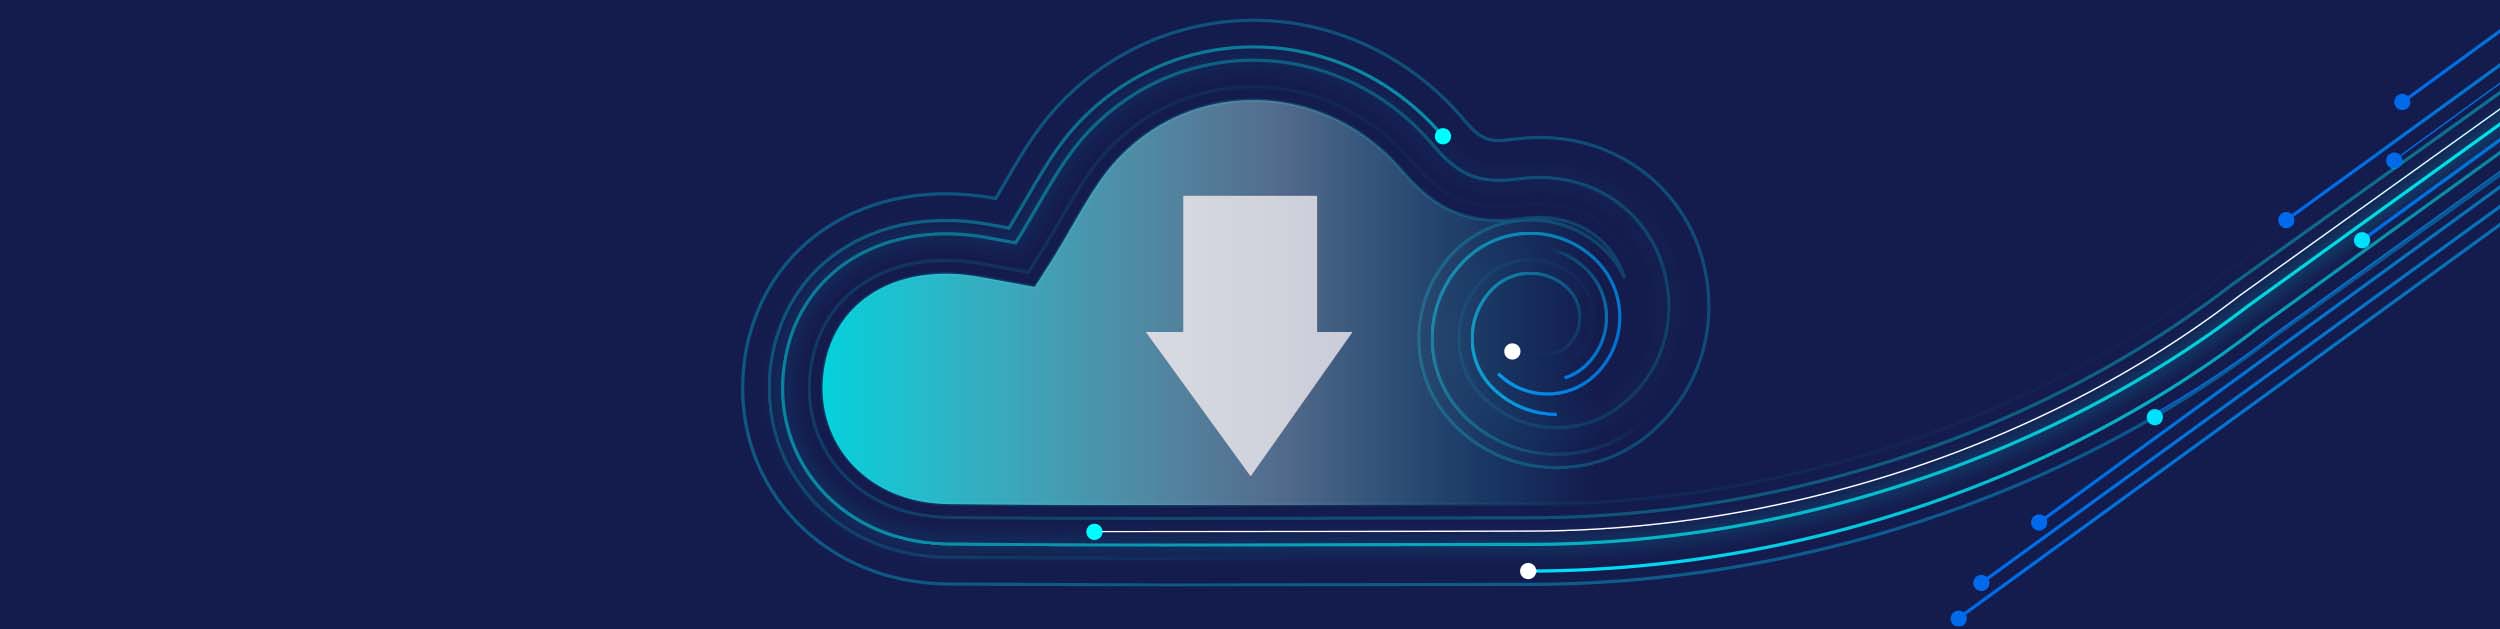 Ilustration of download cloud